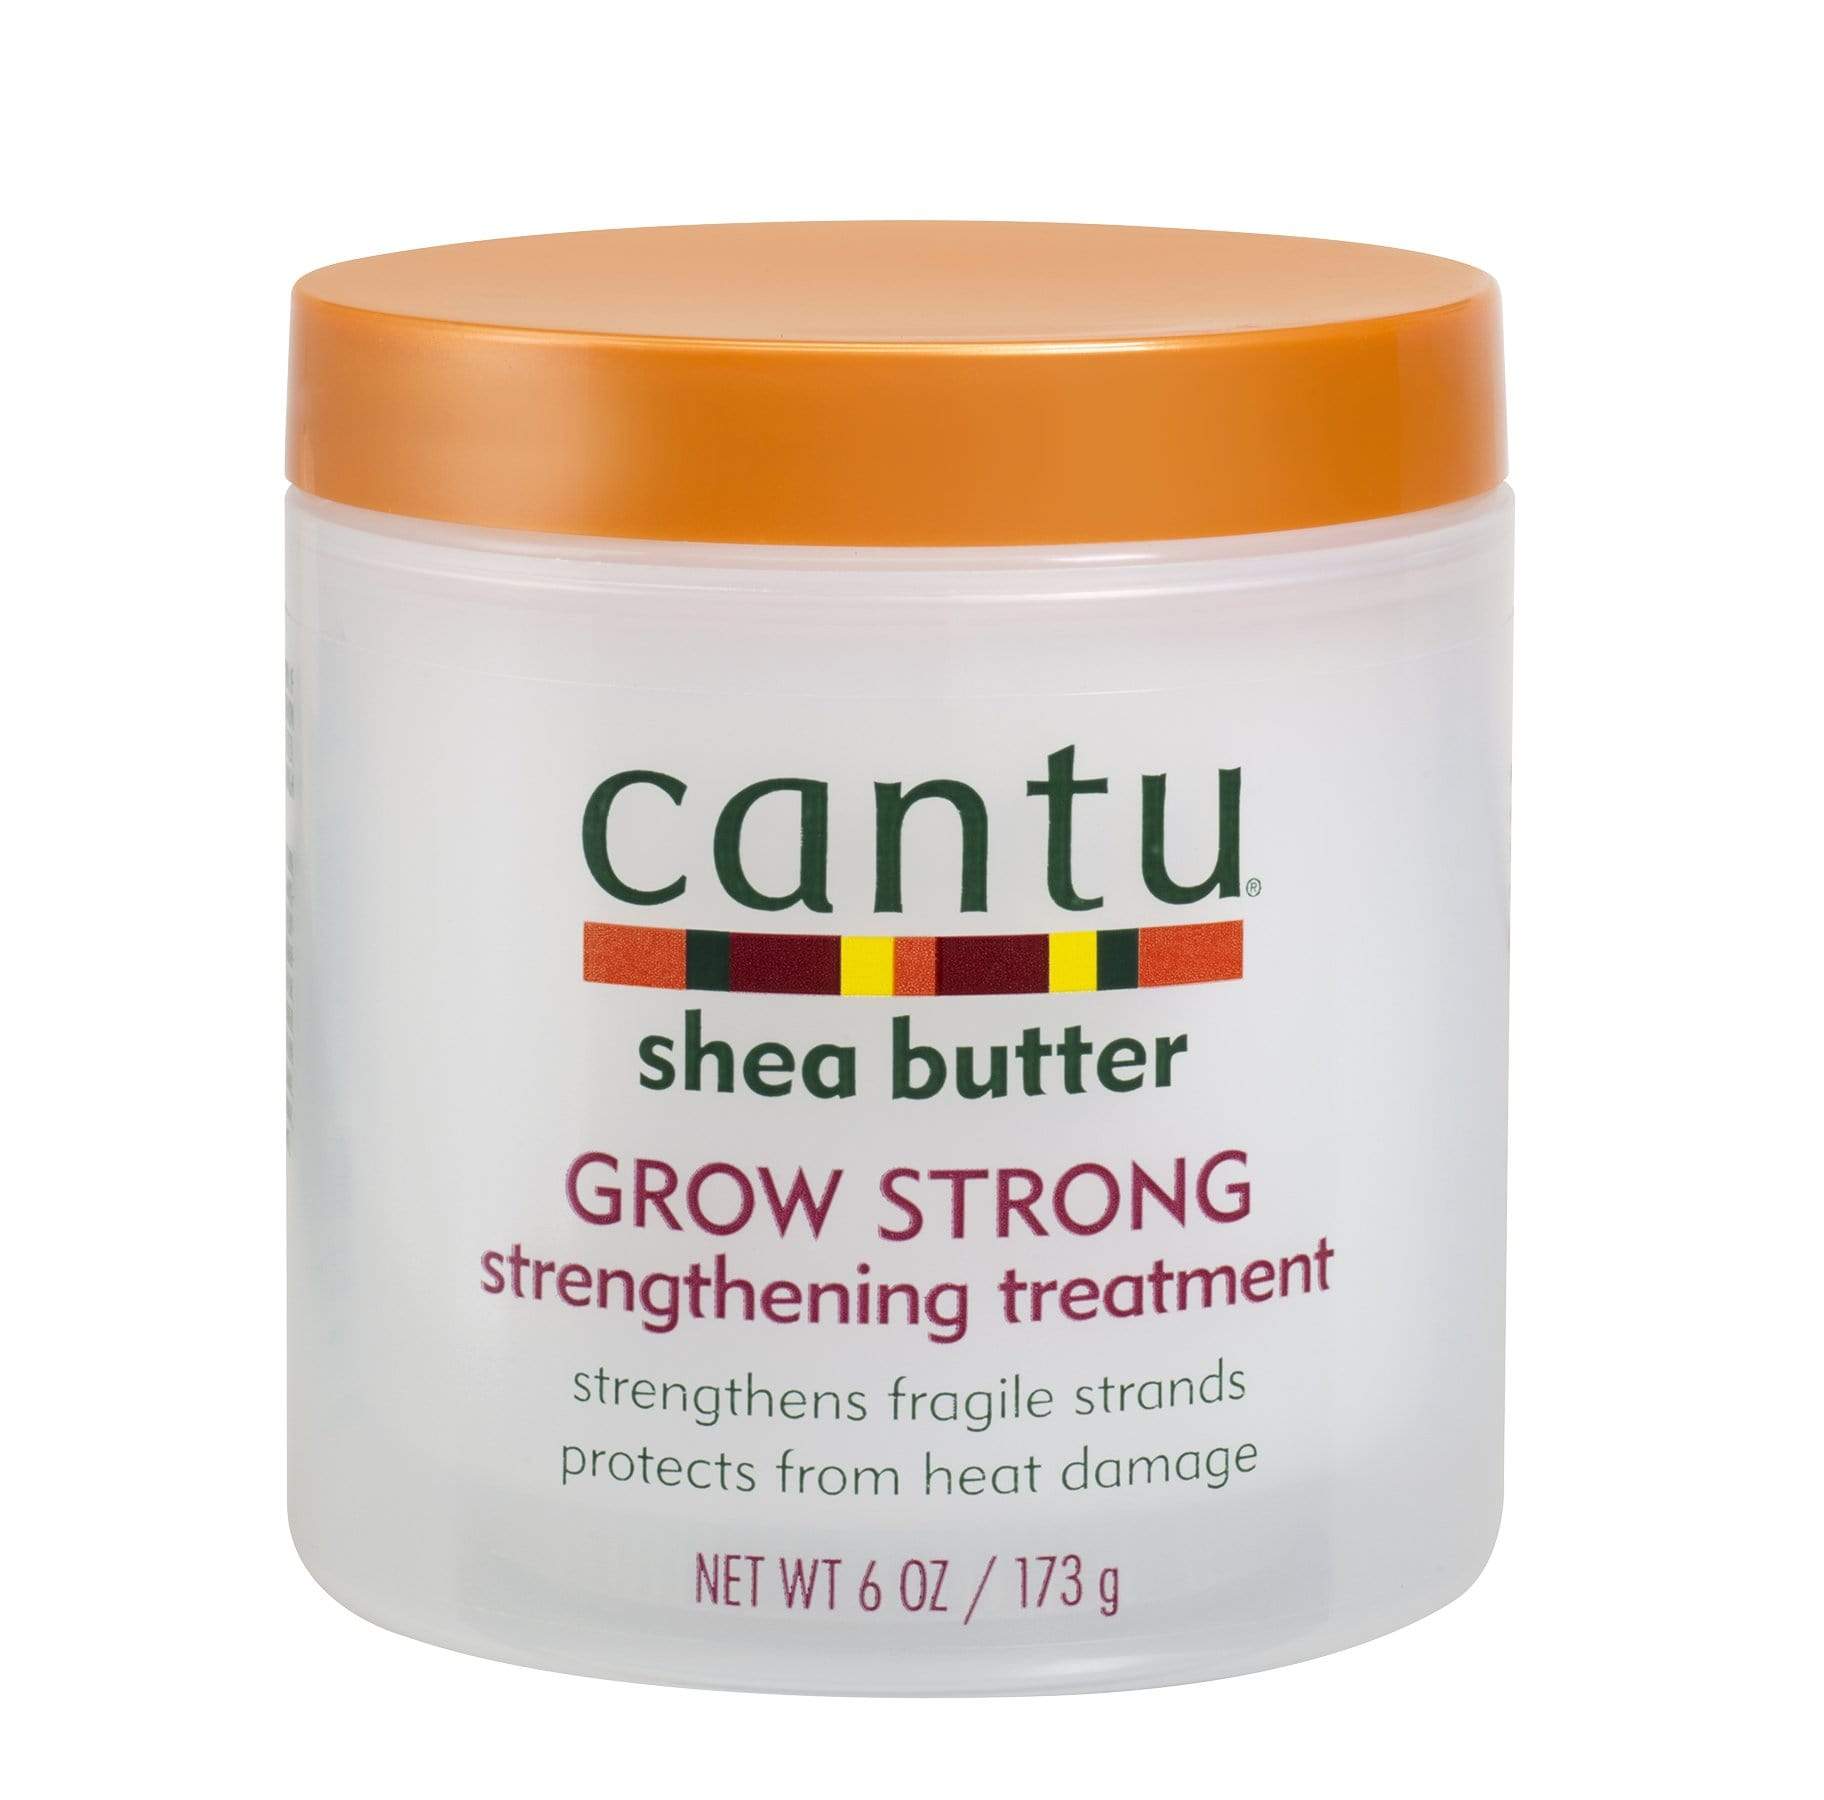 CANTU GROW STRONG STRENGTHENING TREATMENT 6 OZ 173 G - CTU-00004